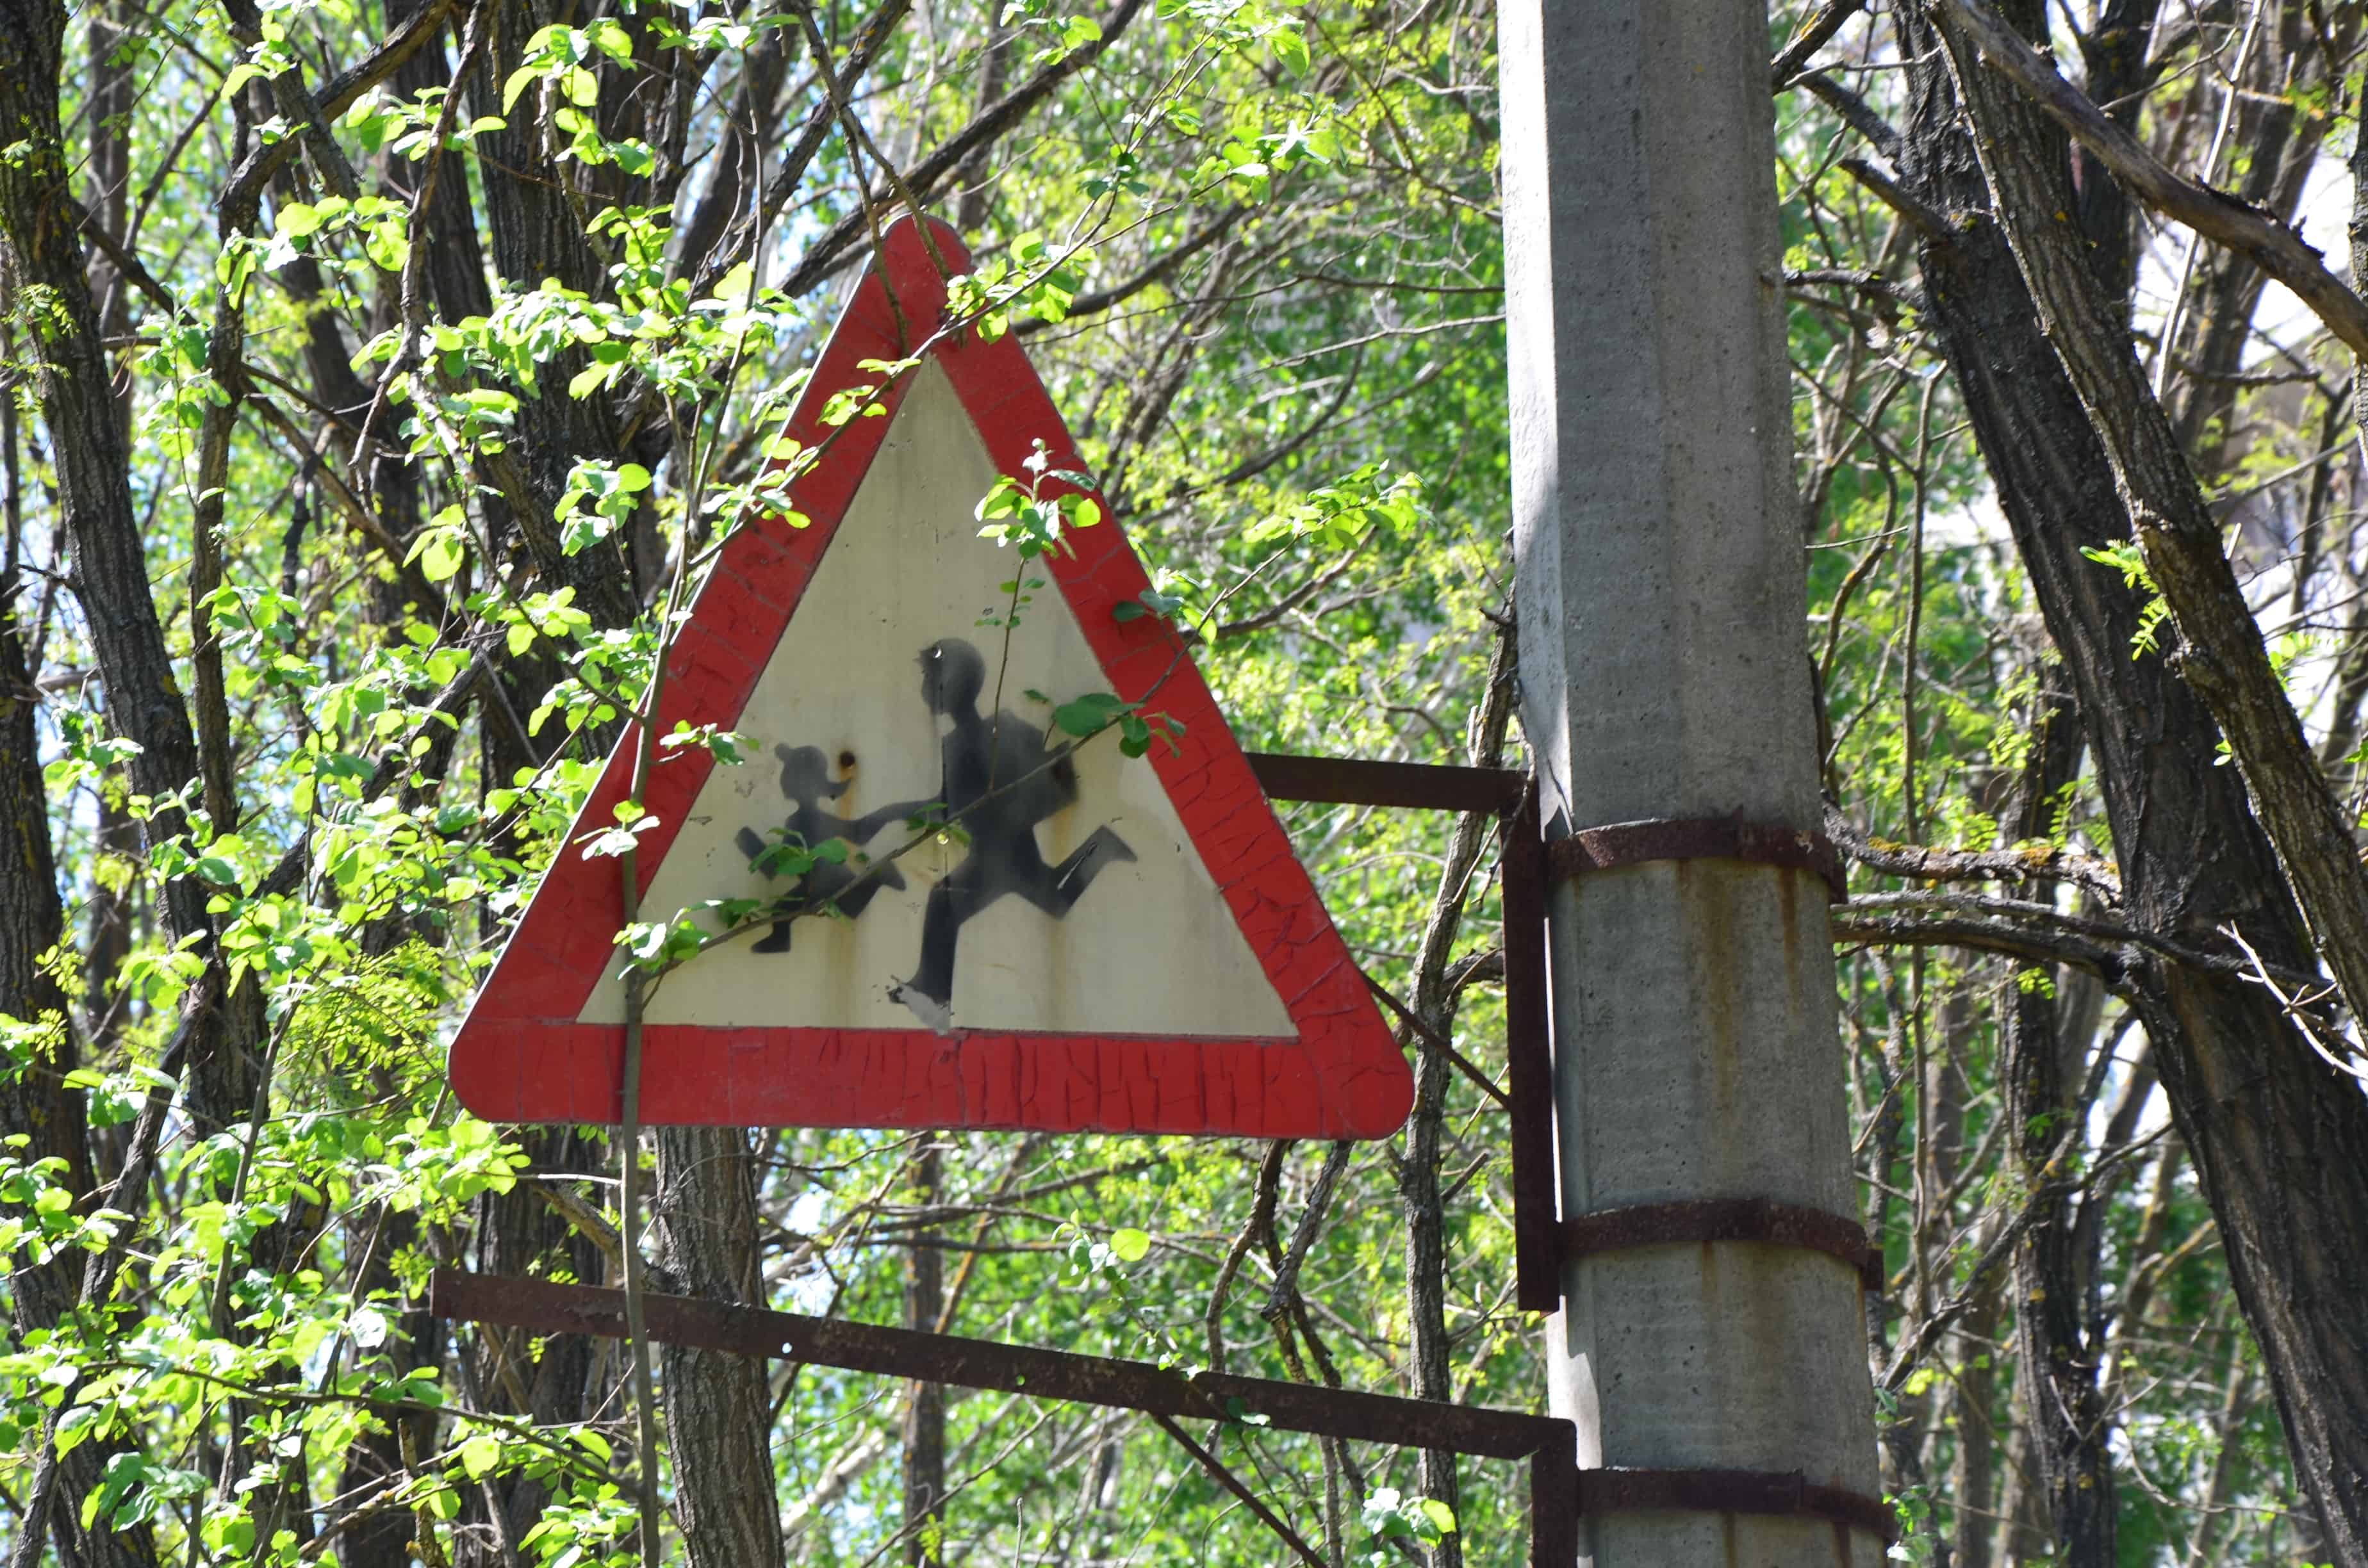 School zone sign in Pripyat, Chernobyl Exclusion Zone, Ukraine